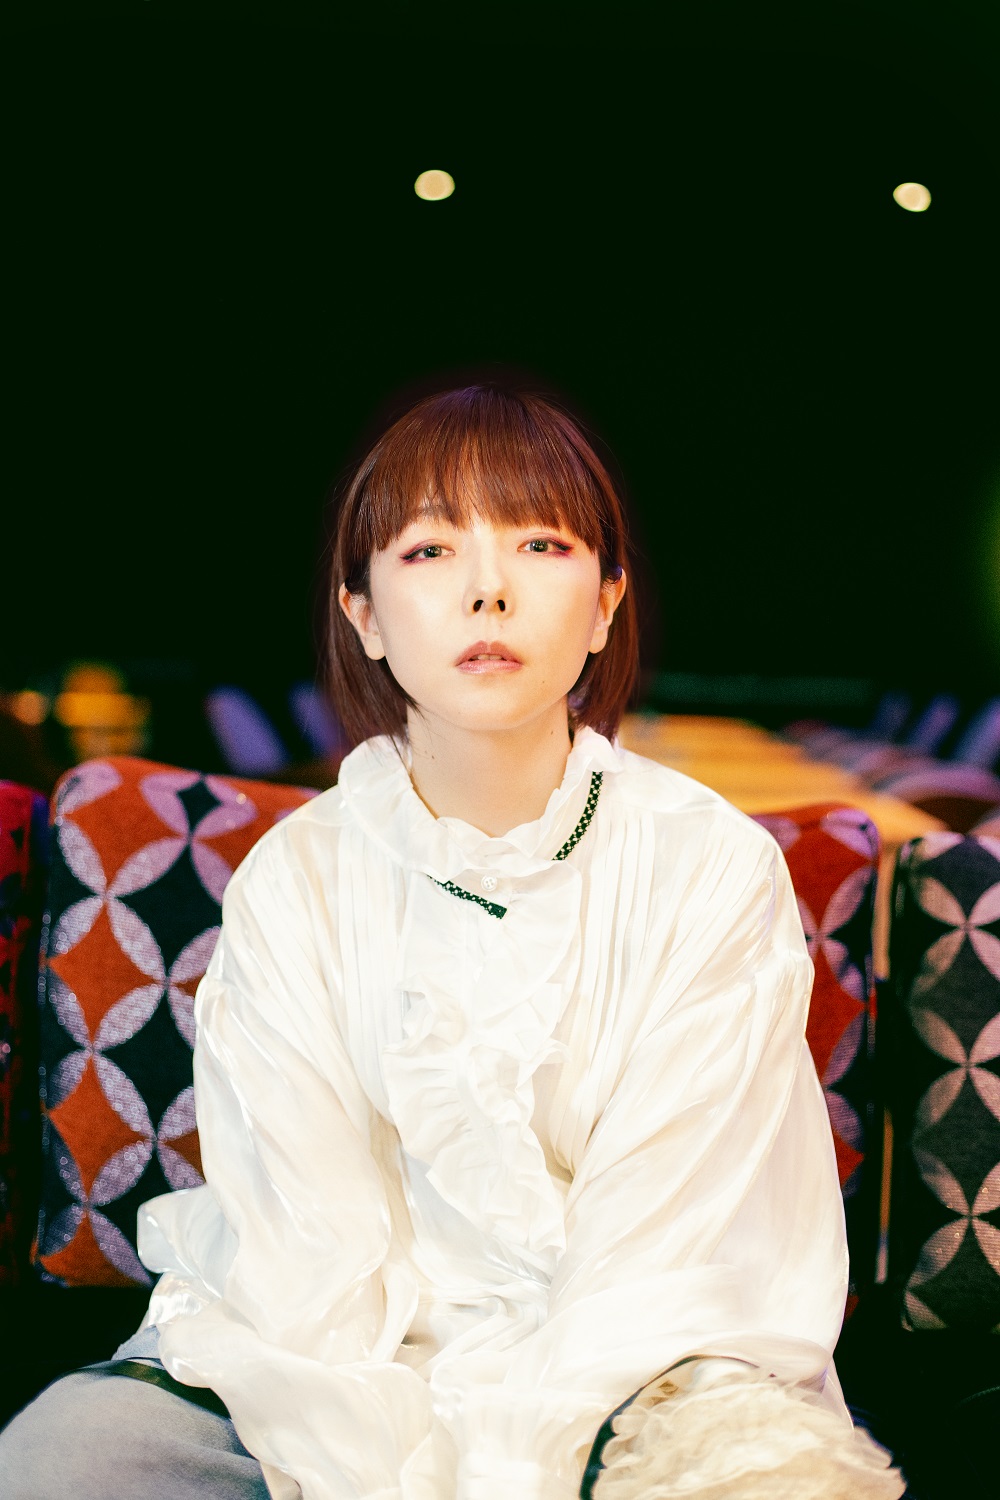 aiko『どうしたって伝えられないから』〈伝えられなかったことを歌詞にした〉aikoの新たな代表作 | Mikiki by TOWER RECORDS